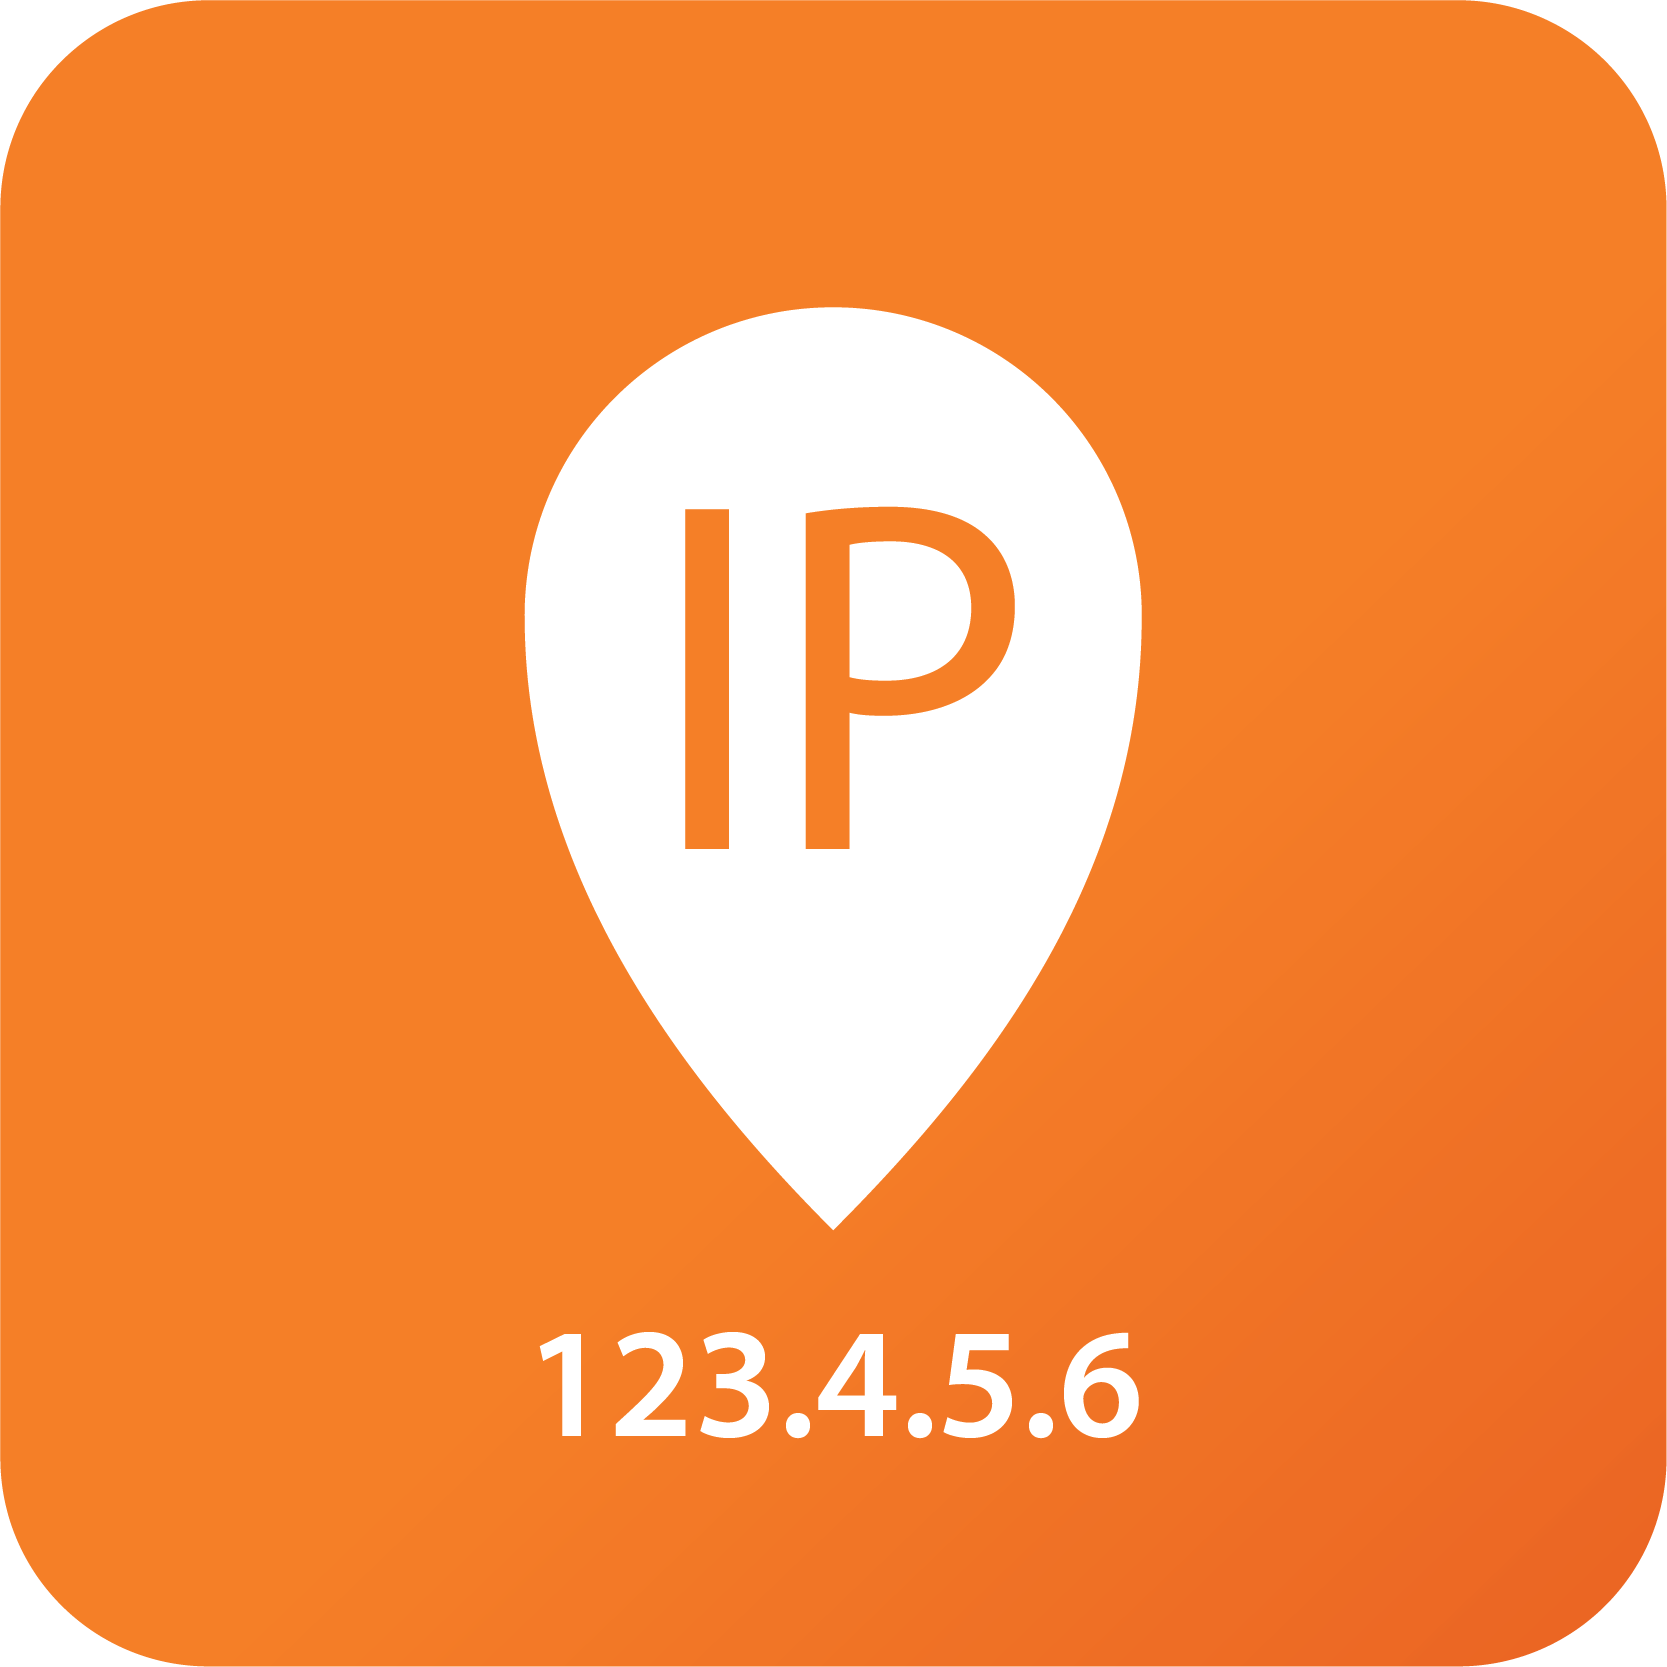 Ip addr. Значок IP. IP адрес иконка. IP-адрес. IP логотип красивый.